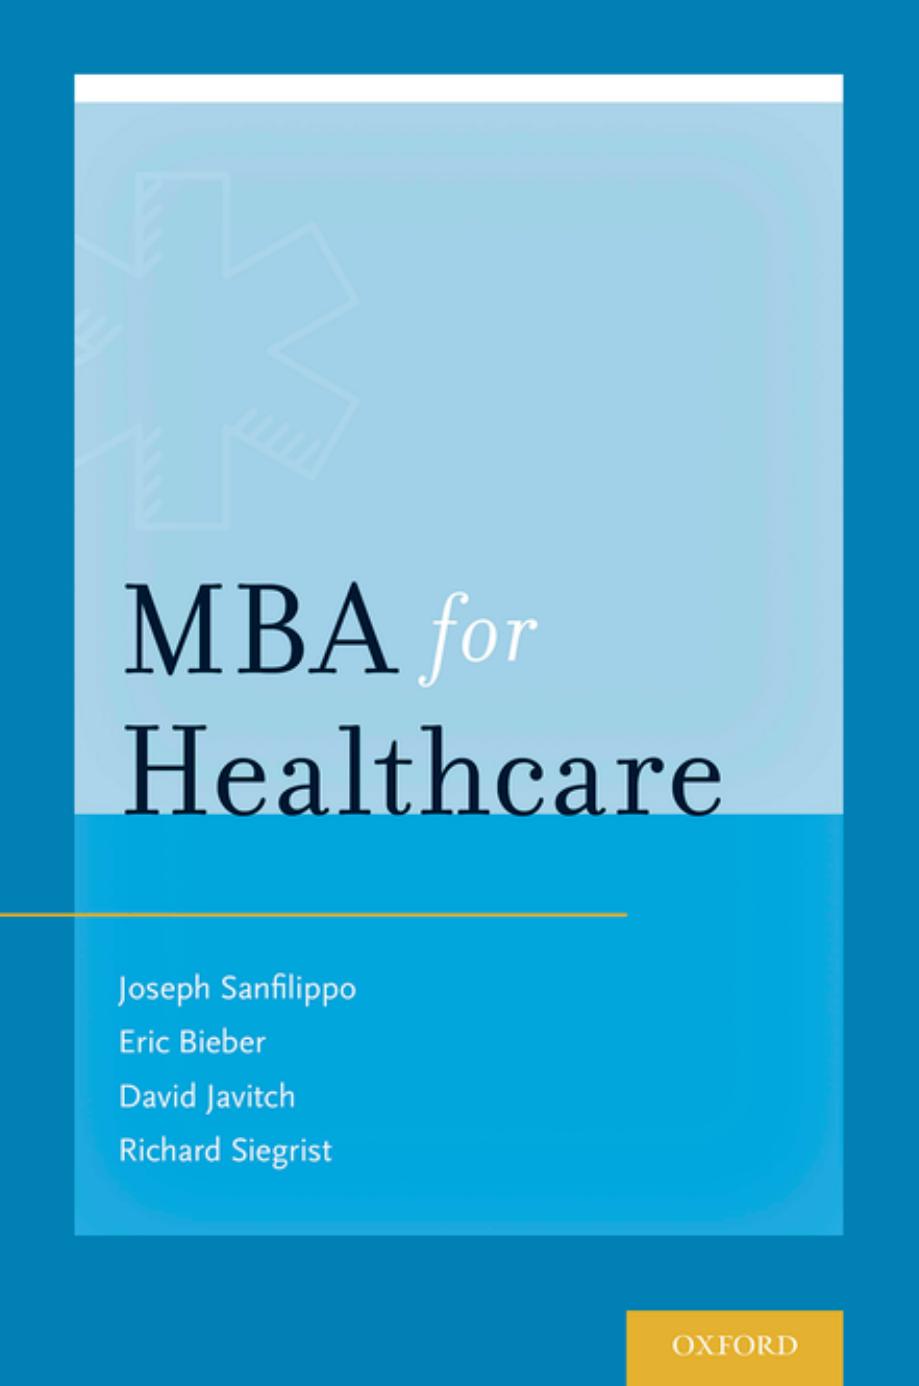 MBA for Healthcare by Joseph S. Sanfilippo; Eric J. Bieber; David G. Javitch; Richard B. Siegrist